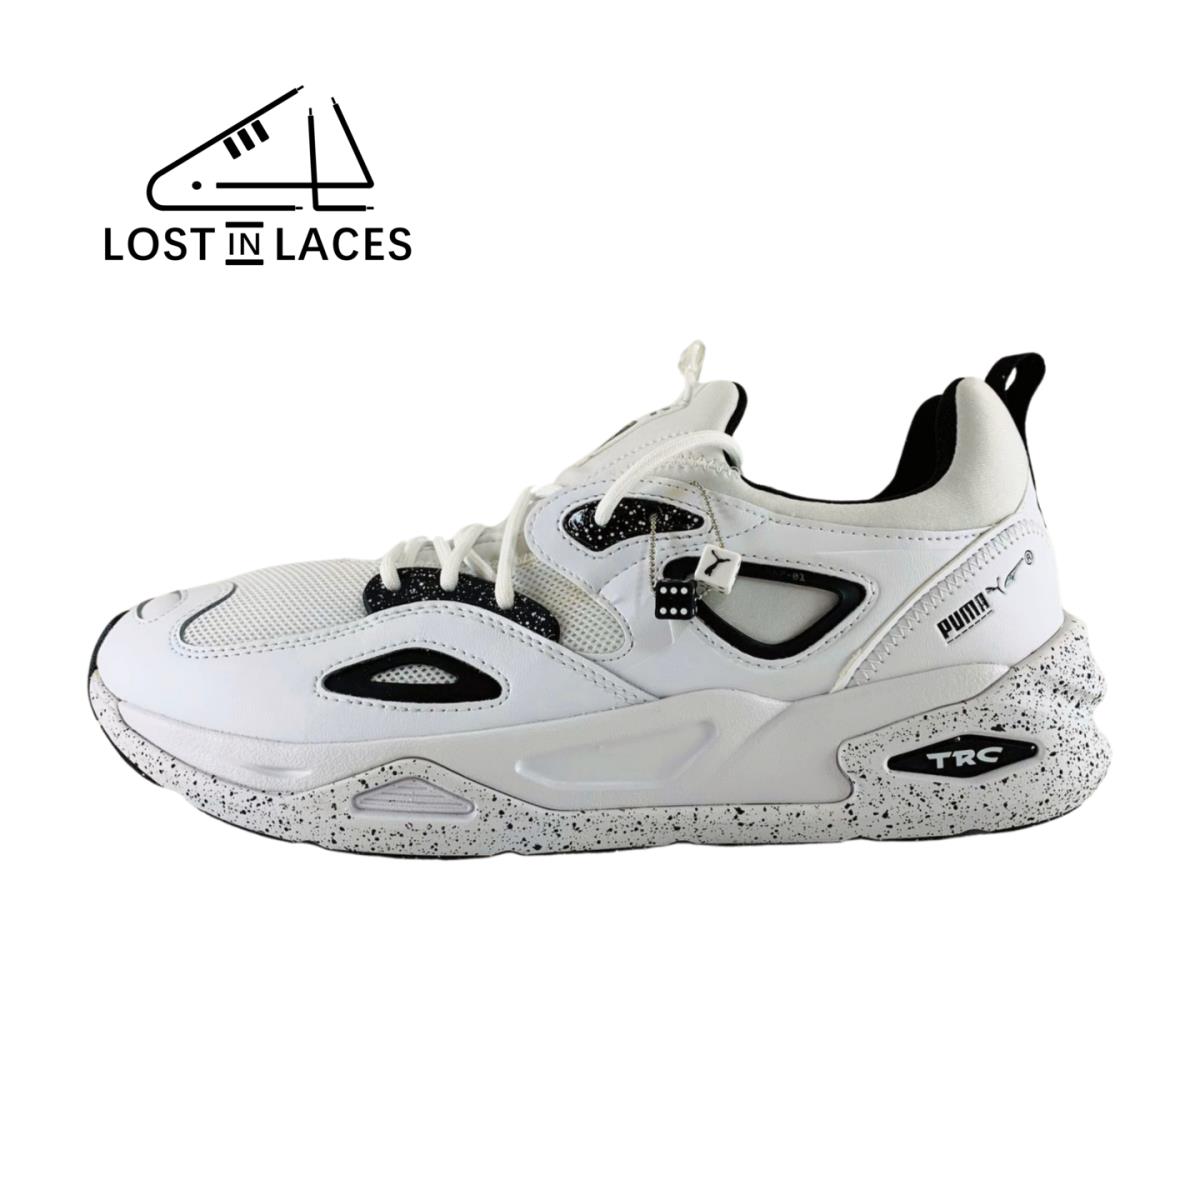 Puma Trc Blaze Chance White Black Sneakers Shoes 386430-01 Men`s Sizes